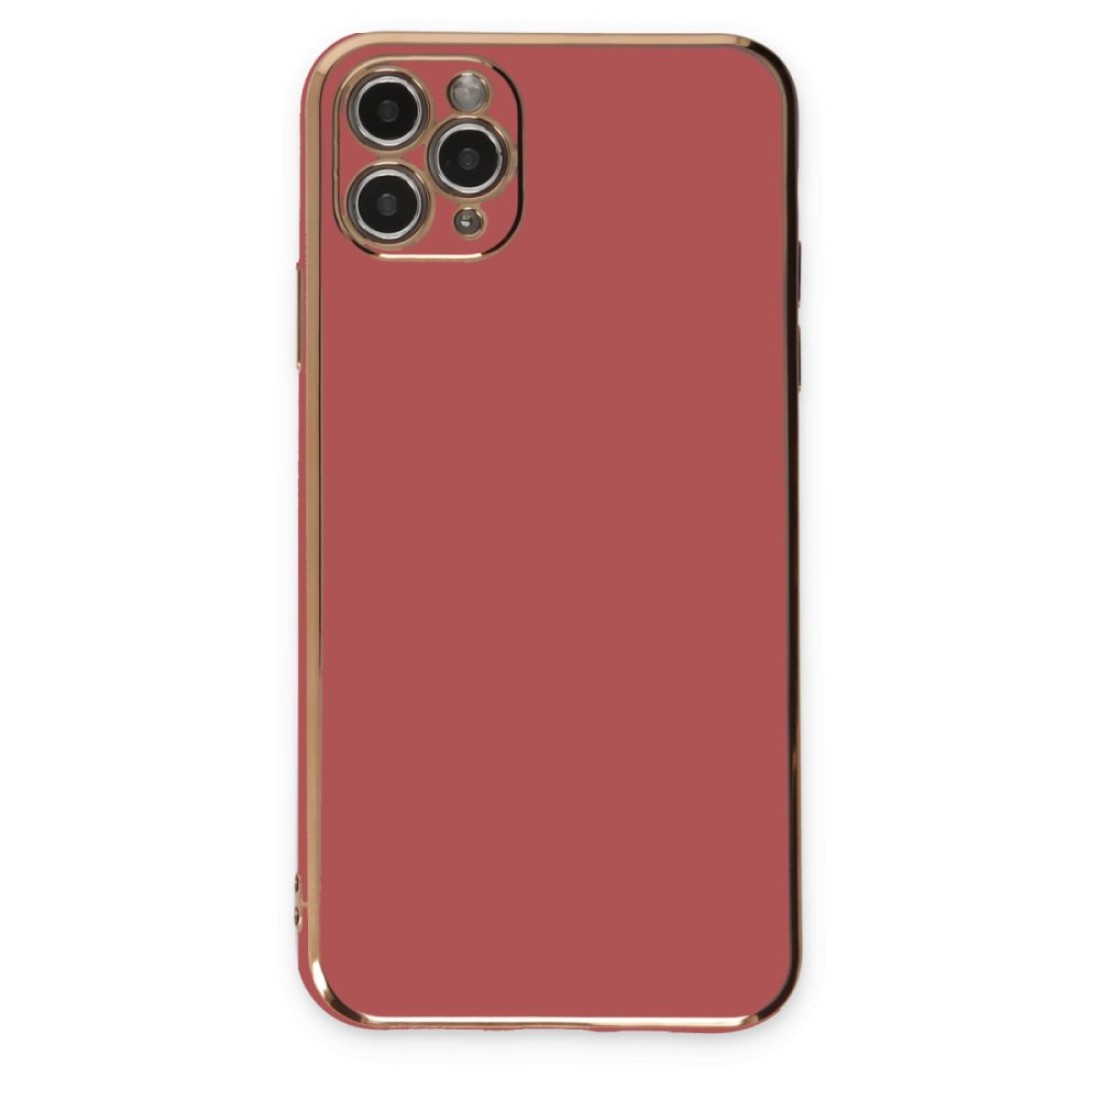 Apple iPhone 11 Pro Max Kılıf Volet Silikon - Kırmızı